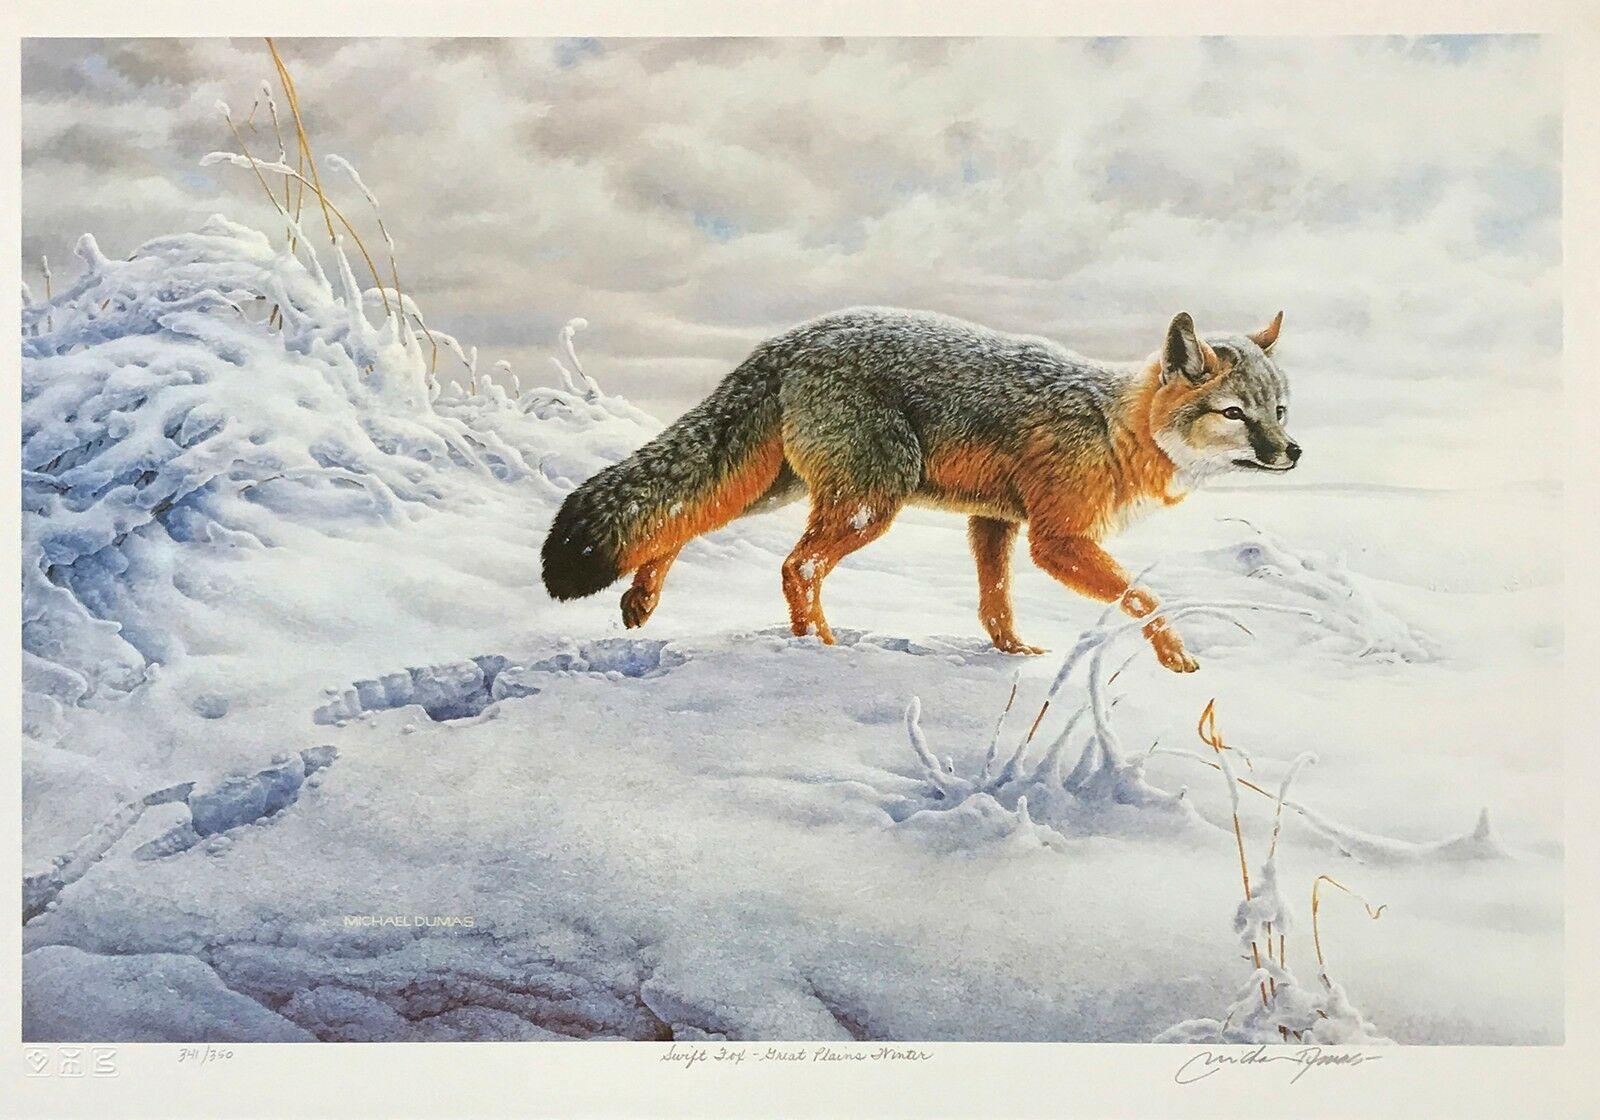 Michael Dumas Figurative Print - SWIFT FOX - GREAT PLAINS WINTER